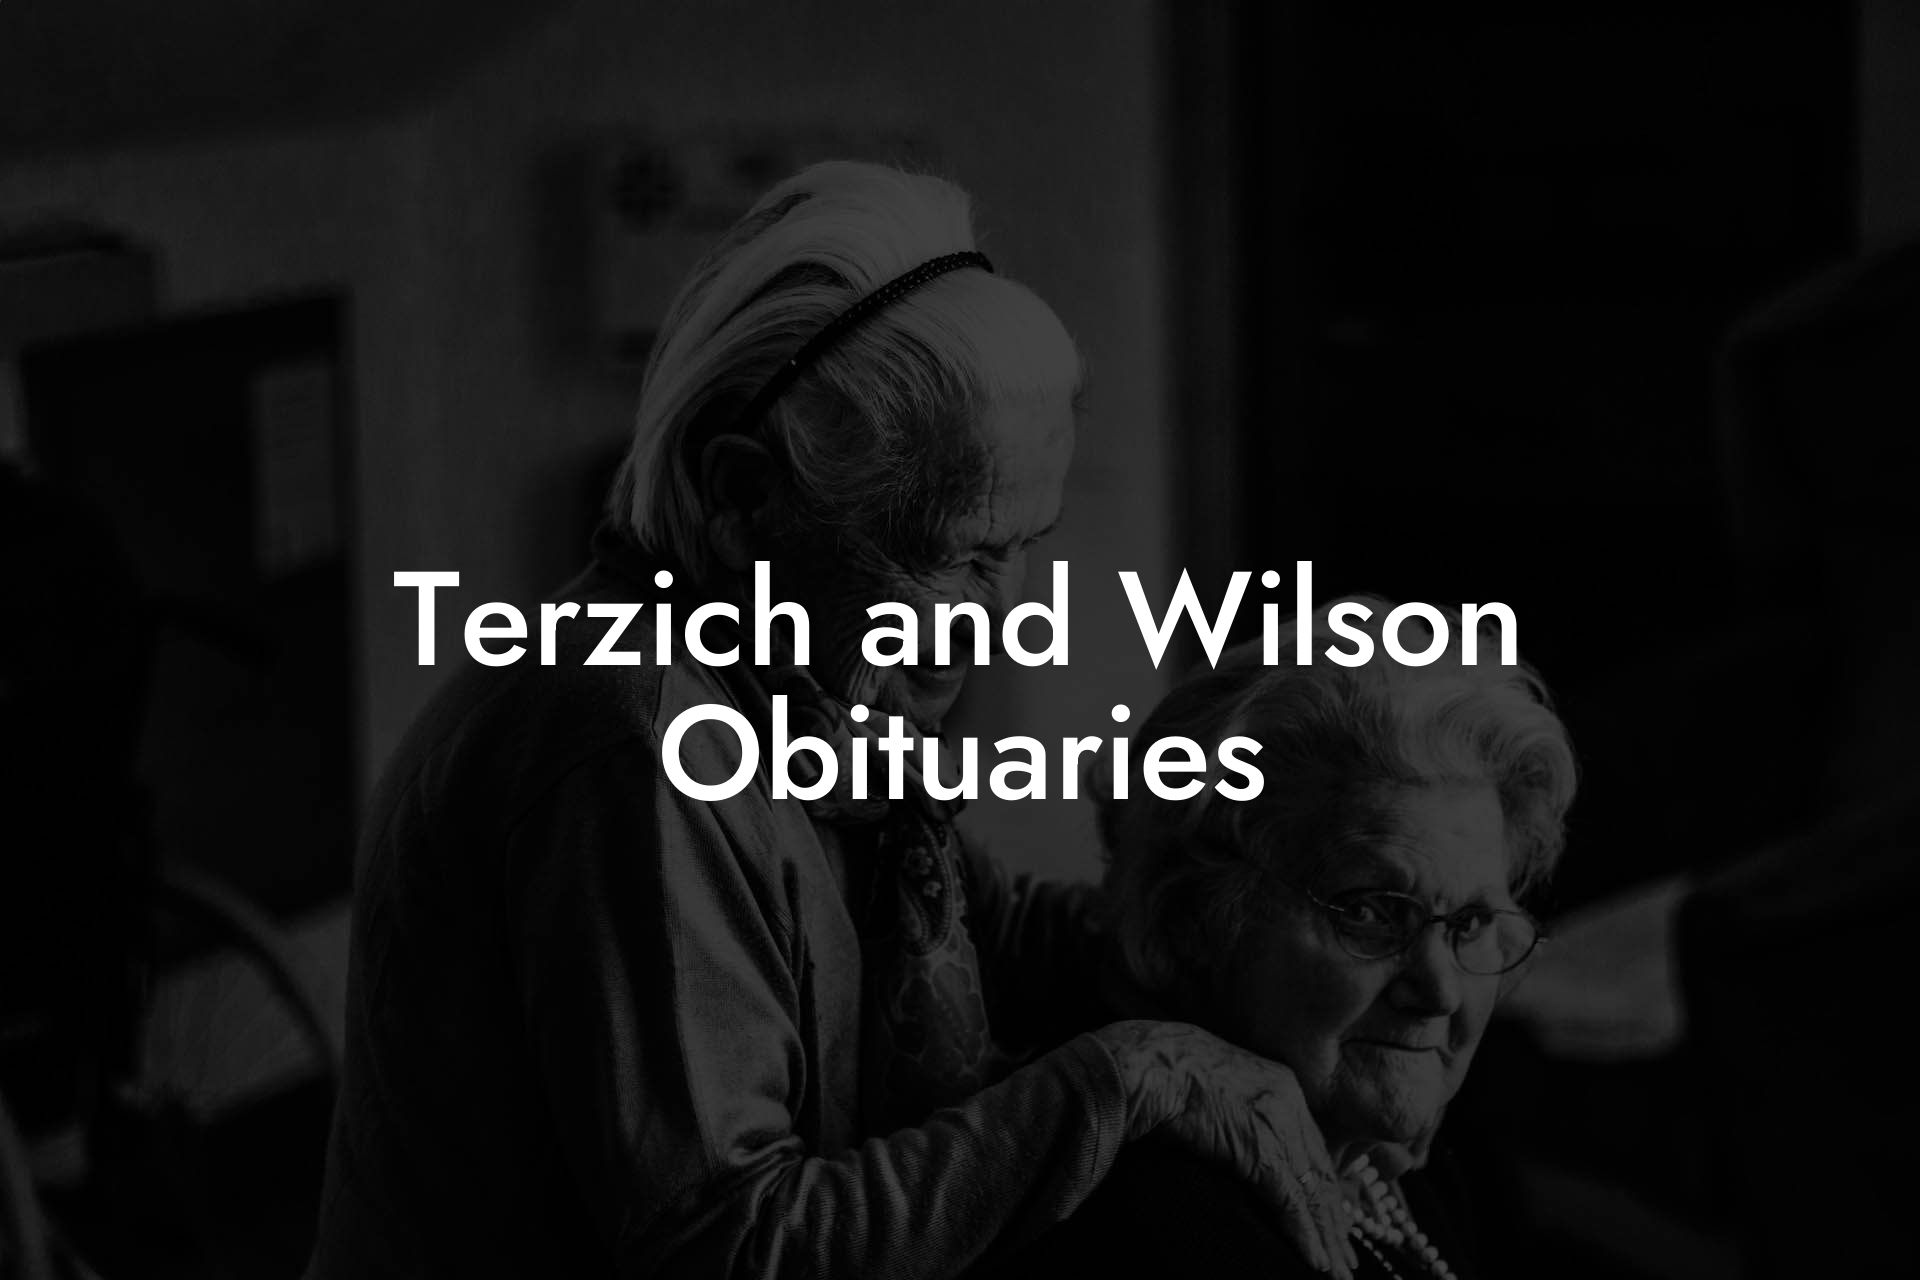 Terzich and Wilson Obituaries